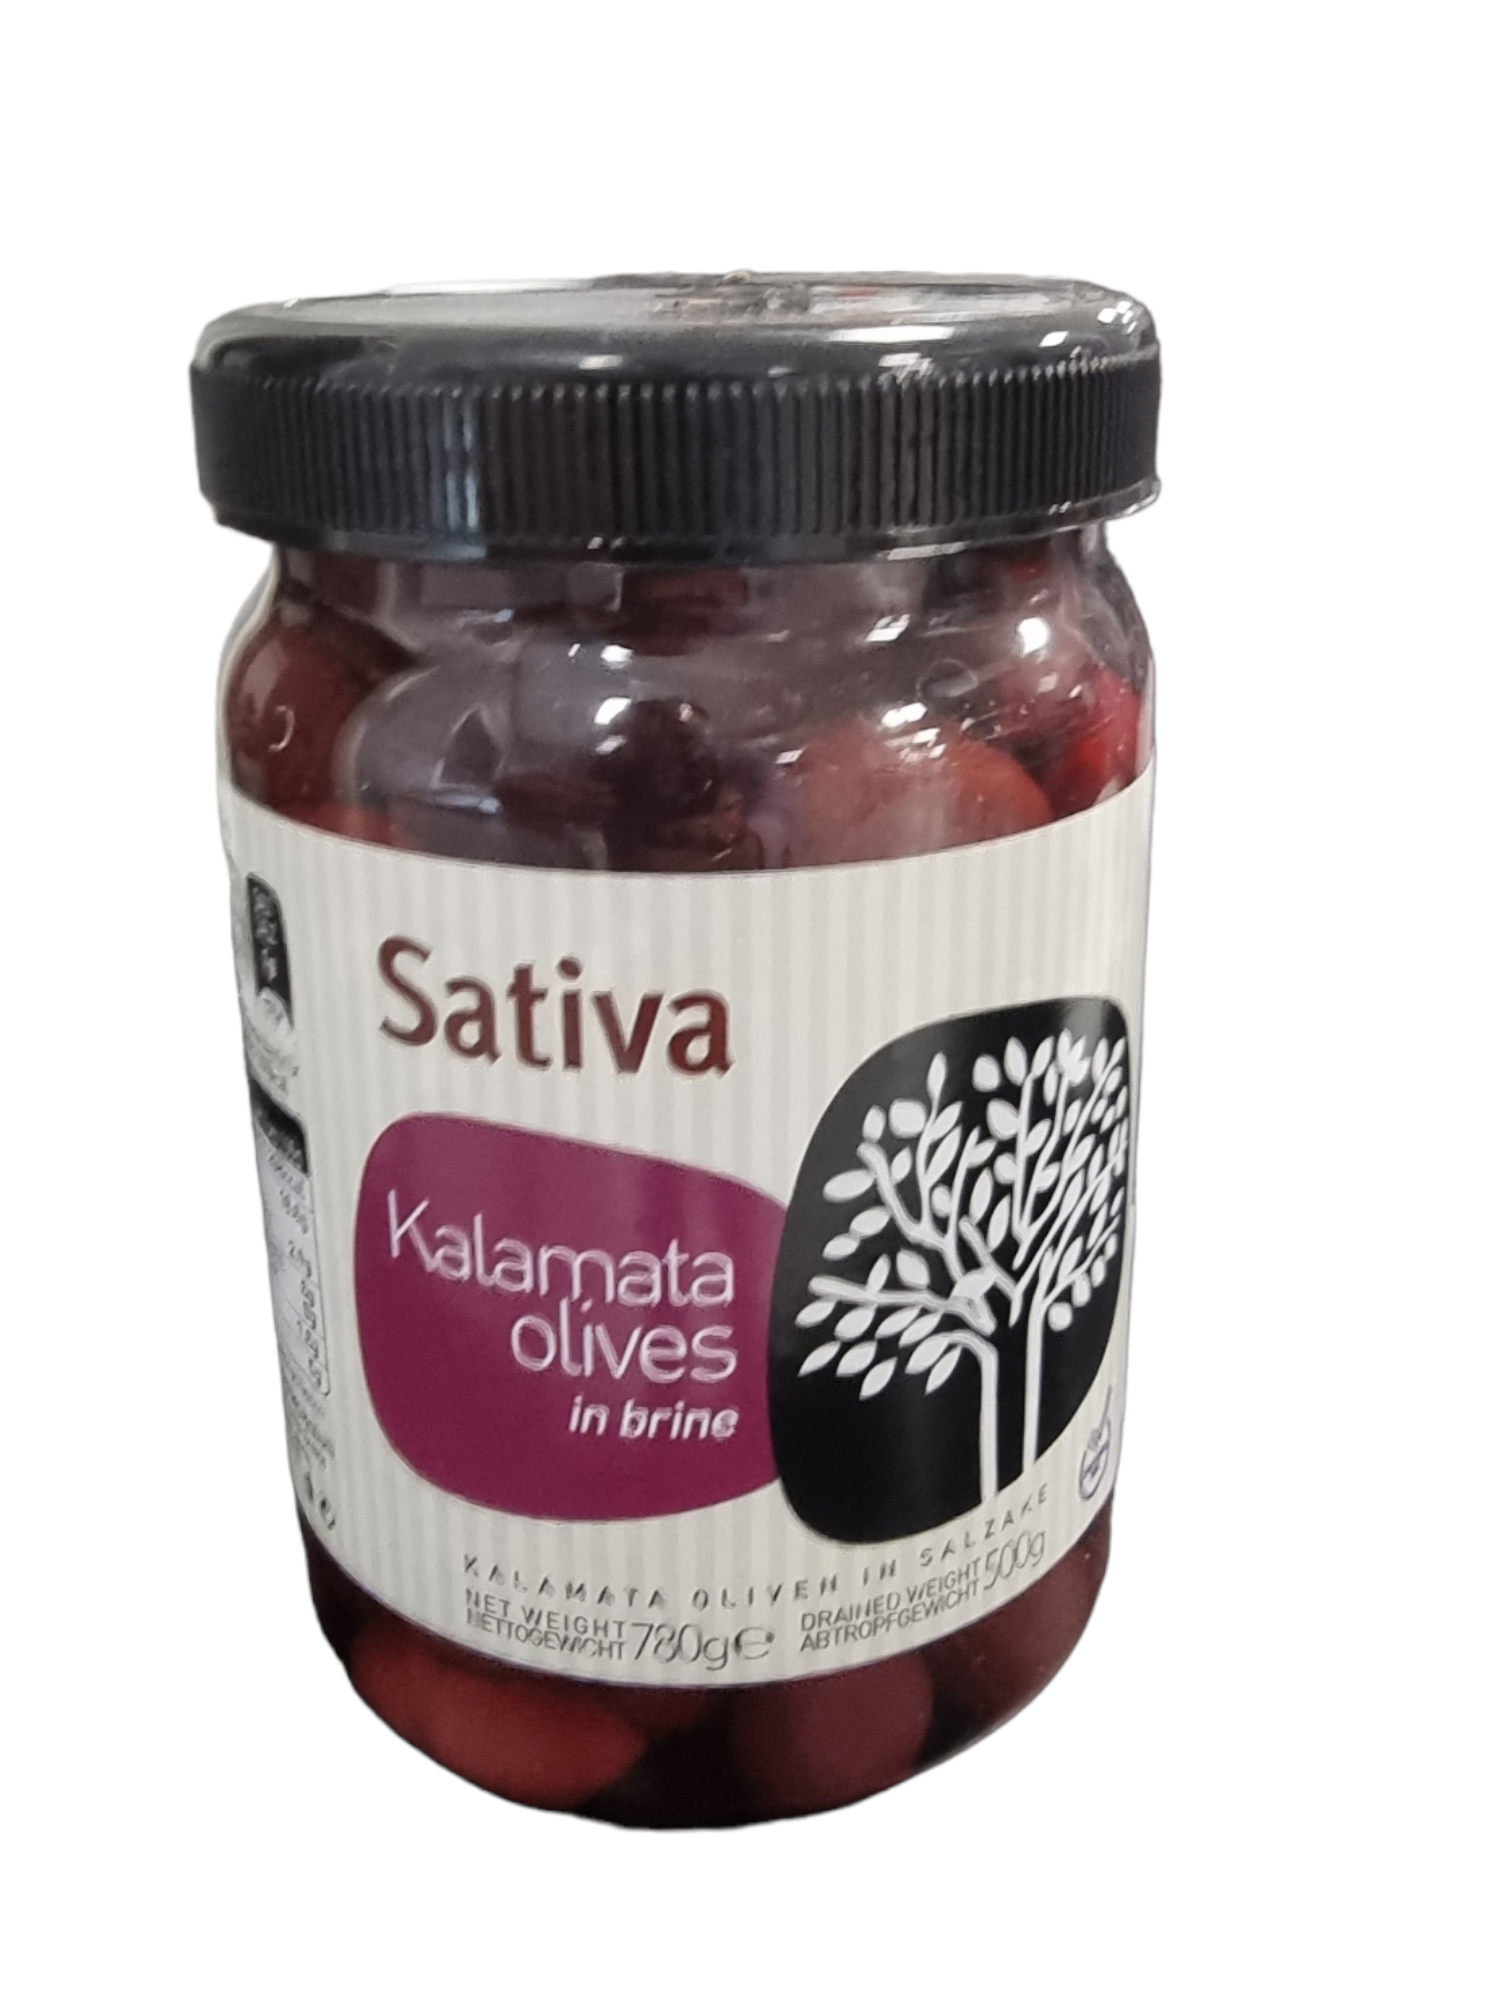 Sativa Oliven Kalamon ganz Pet 500g (Öl & Oliven) - Bild 1